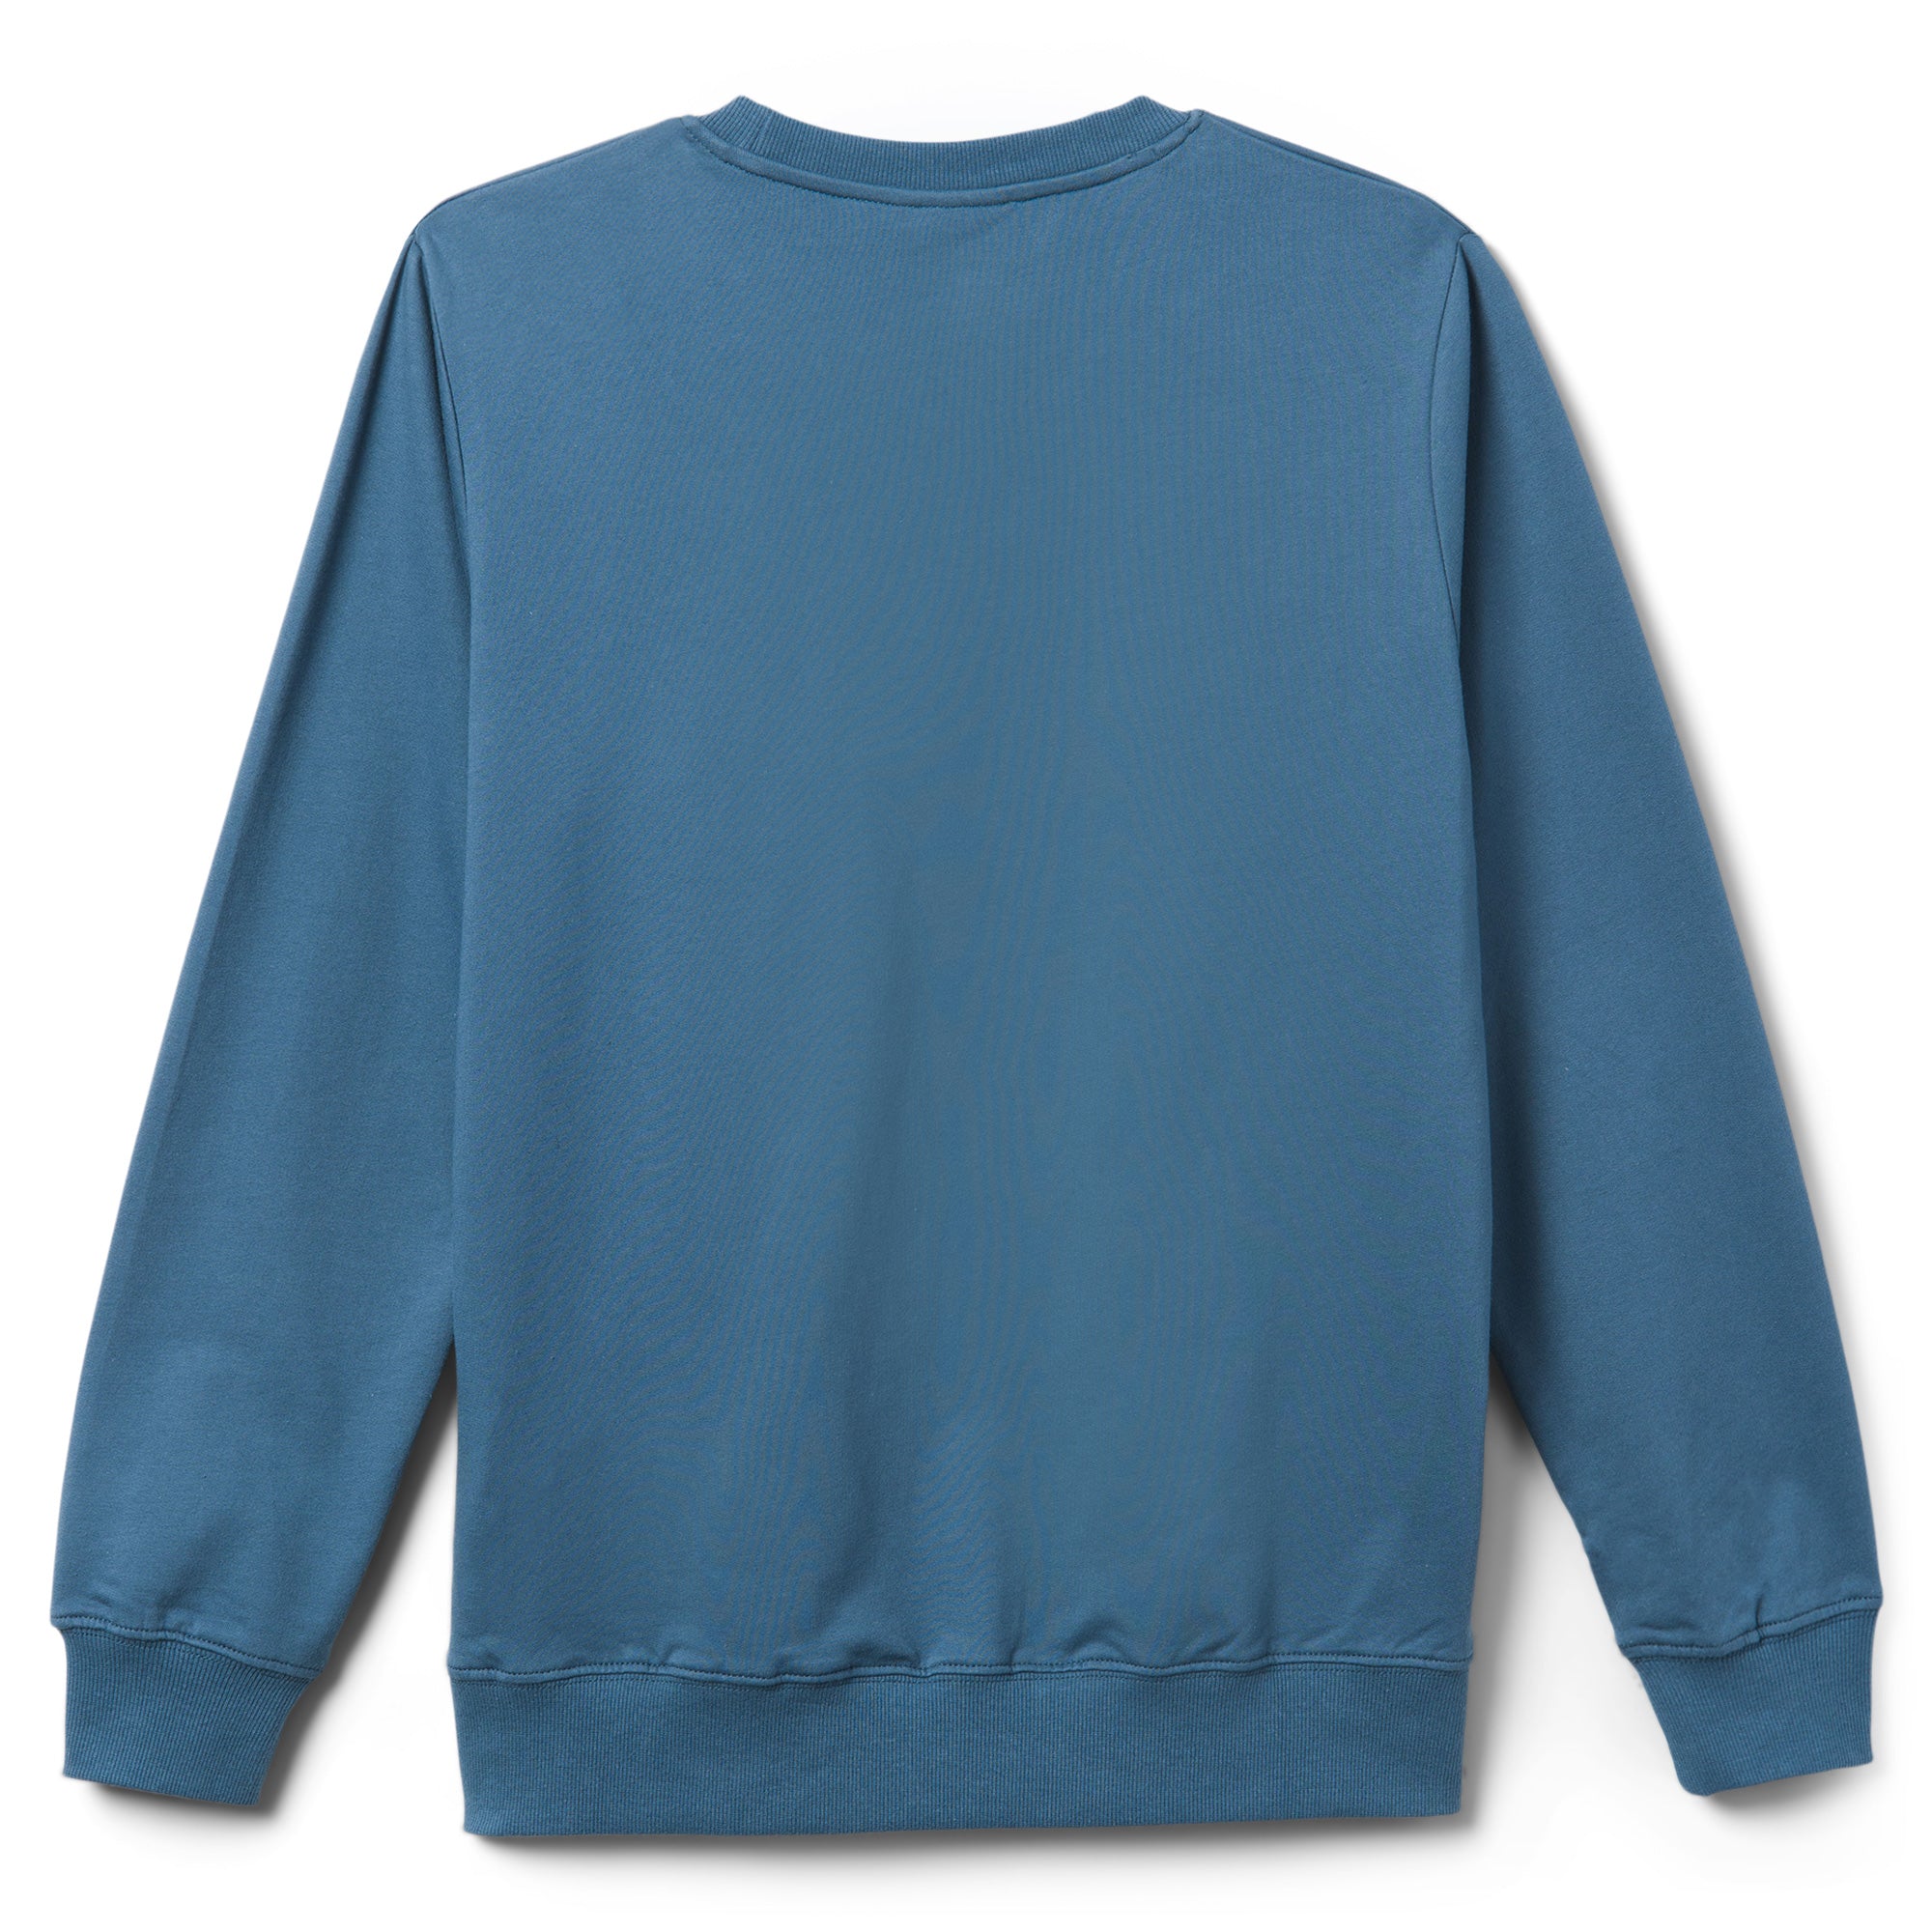 Keroppi & Teru Teru Sweatshirt Blue Apparel Global License   